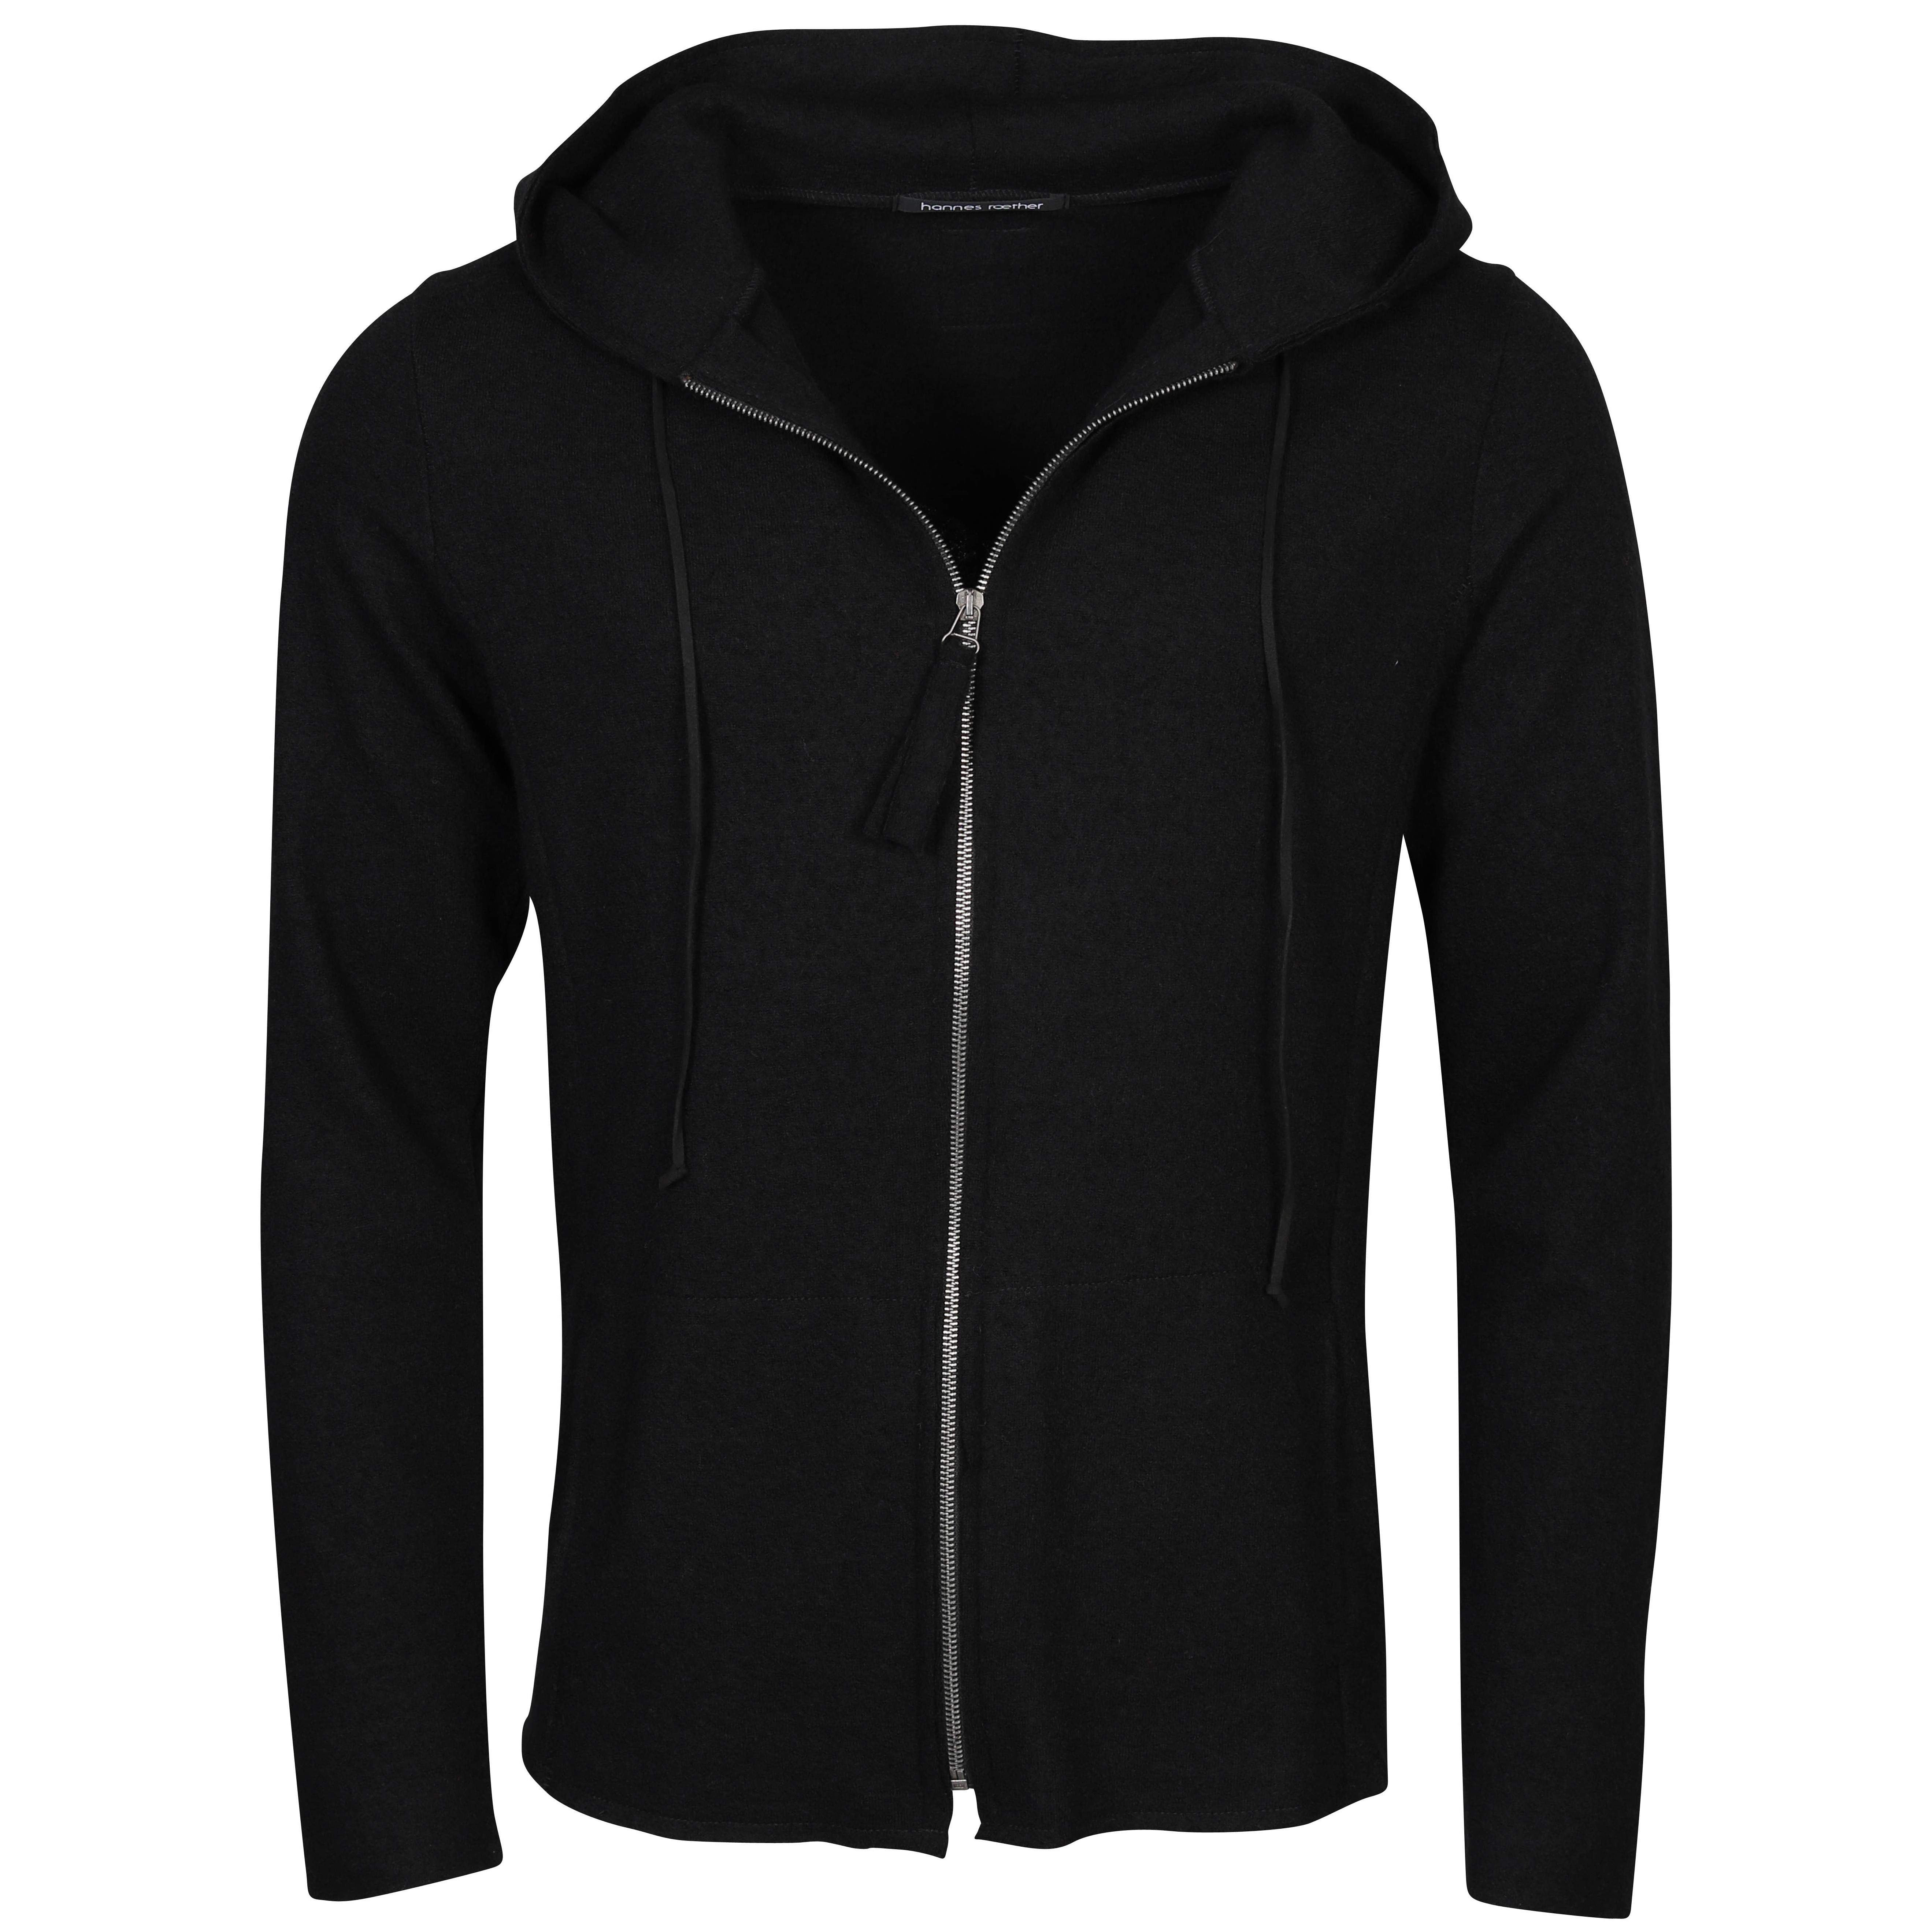 Hannes Roether Knit Hooded Zip Jacket in Black